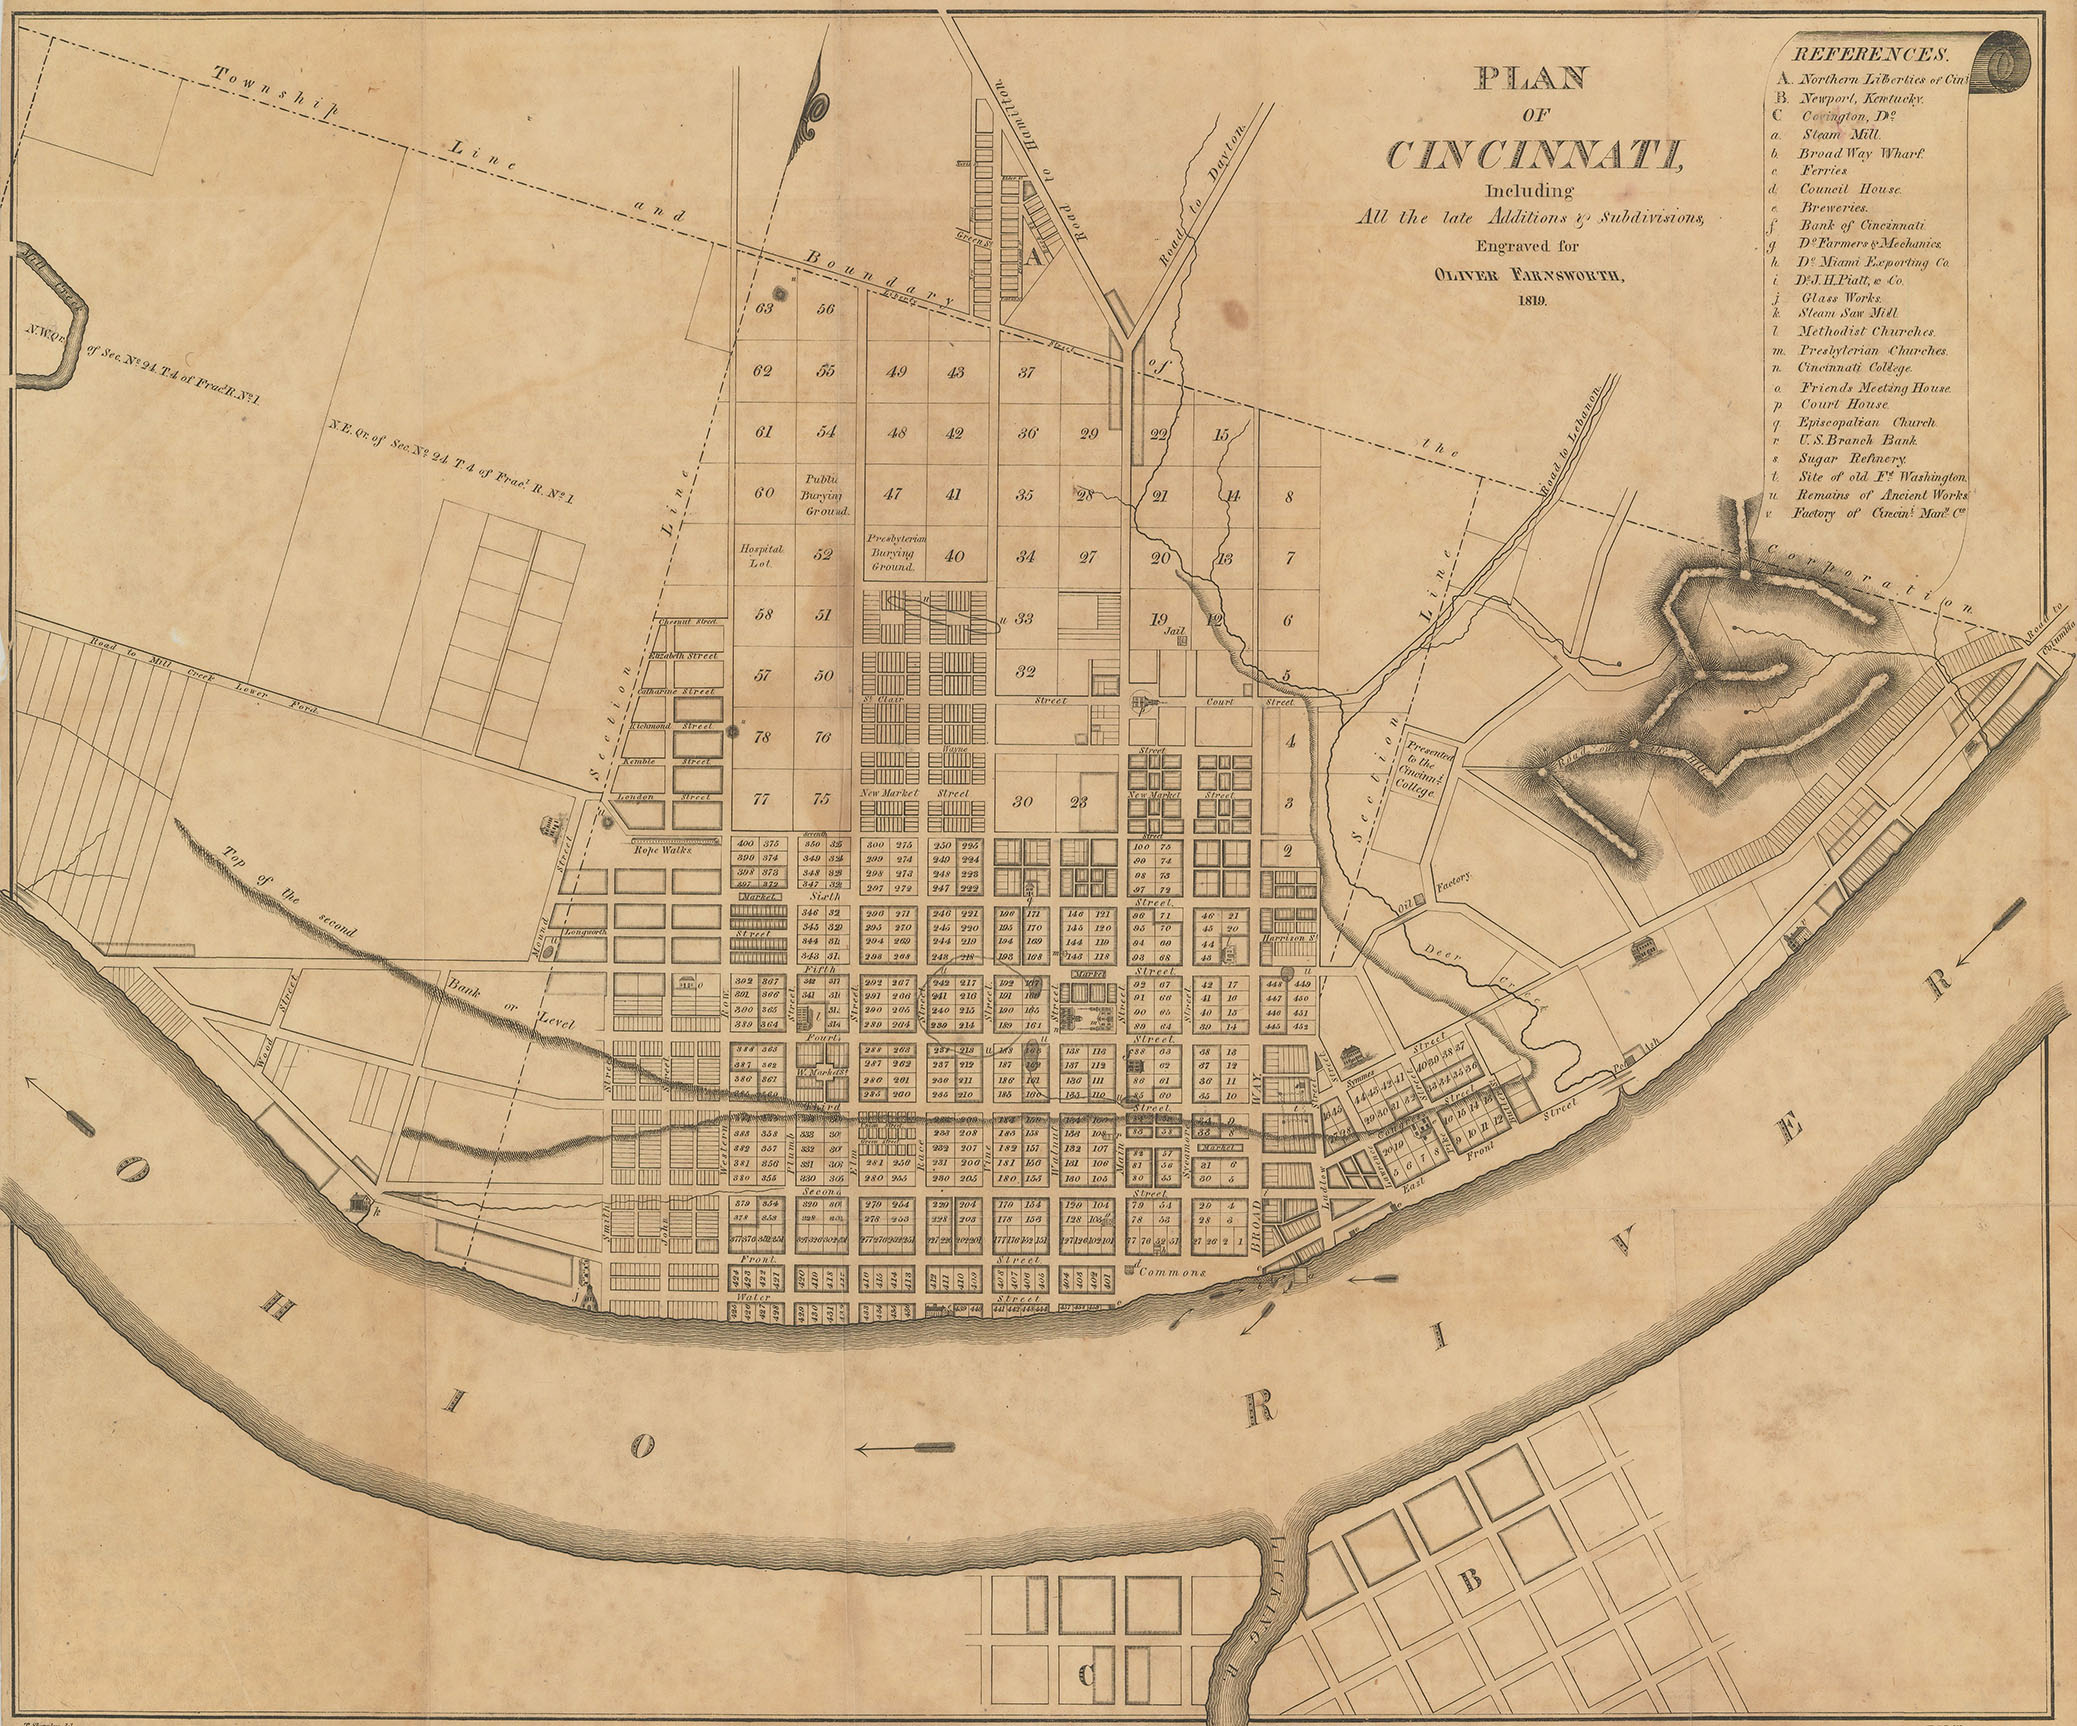 Cincinnati in 1819